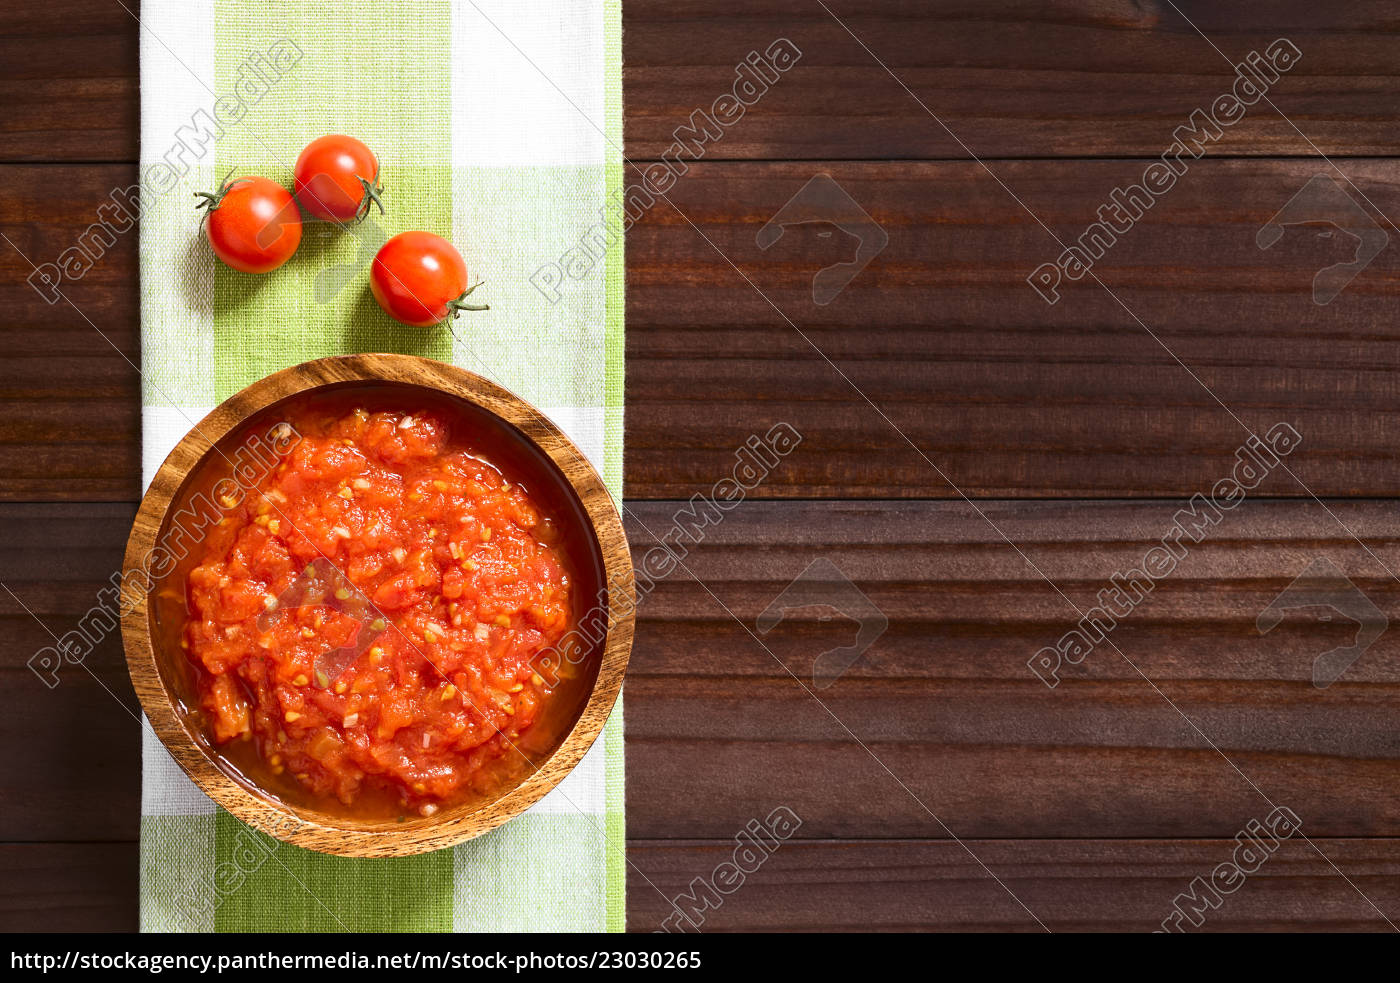 hausgemachte marinara oder pomodoro tomatensoße - Stockfoto - #23030265 ...